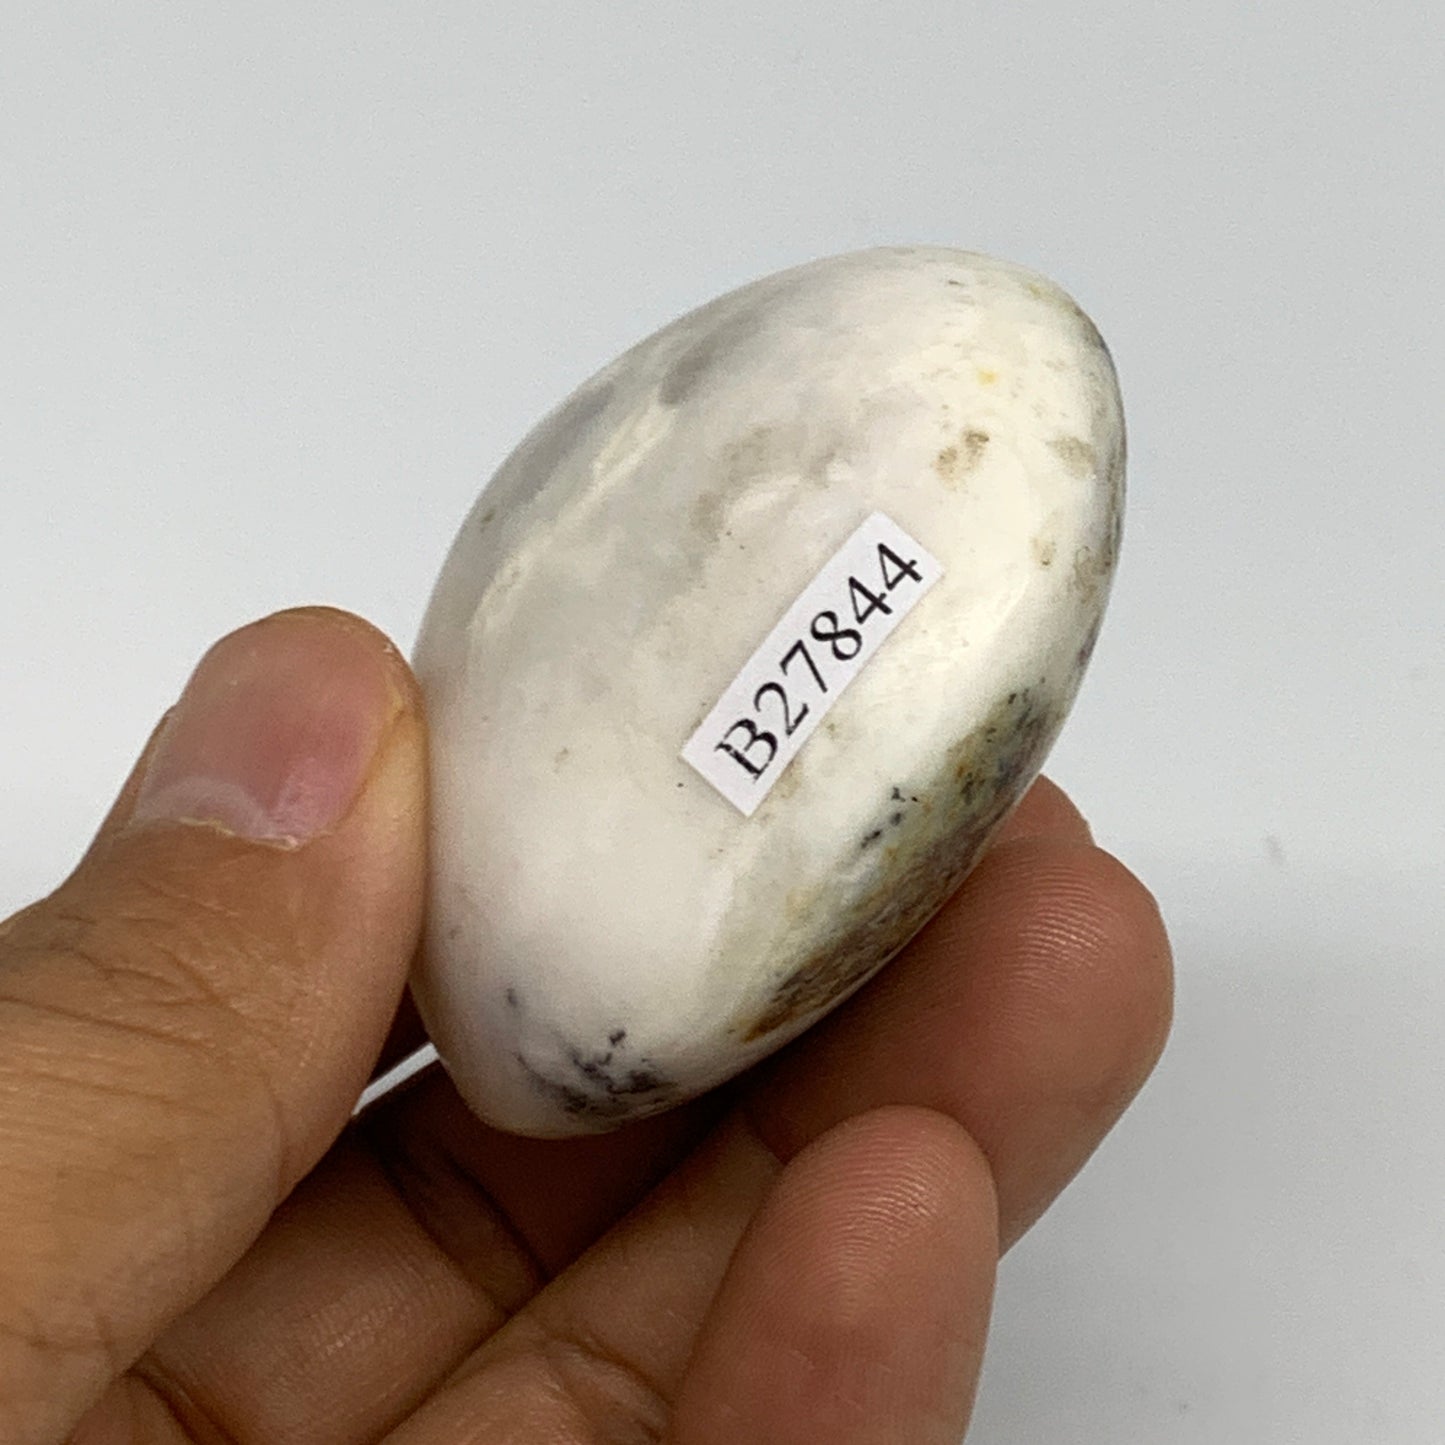 86.5g, 2"x1.8"x1.2", Dendrite Opal Palm-Stone Reiki Energy Crystal, B27844